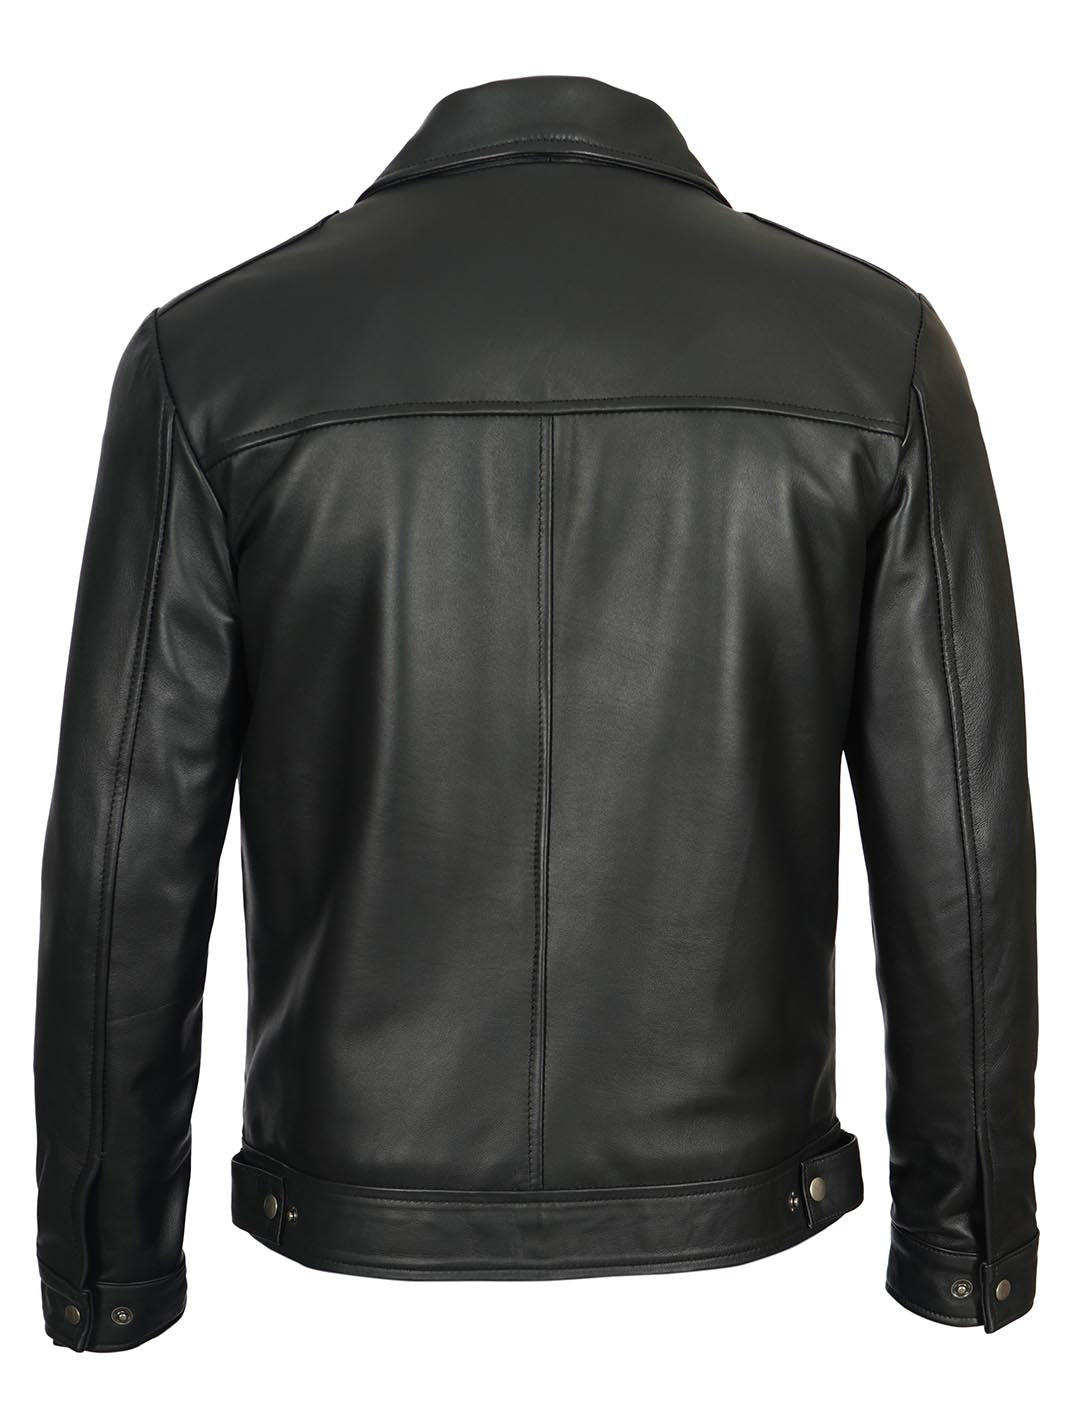 Men's Leather Jackets | Shop Stylish & Durable Jackets | Decrum